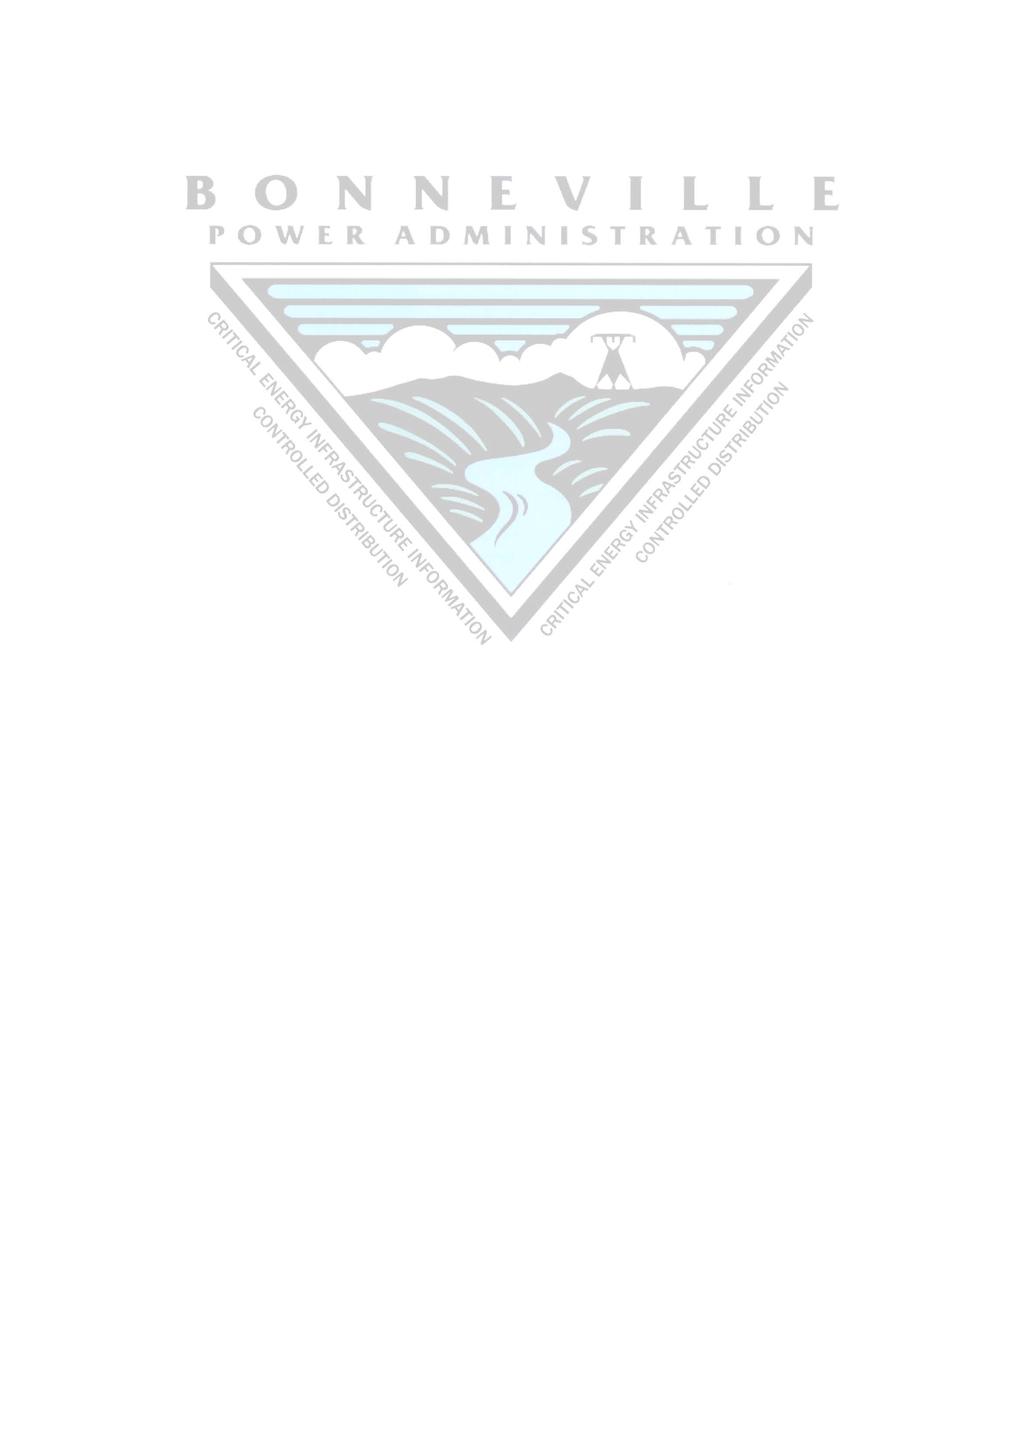 Transmission Planning WECC 2014 Progress Report March 14, 2014 Report